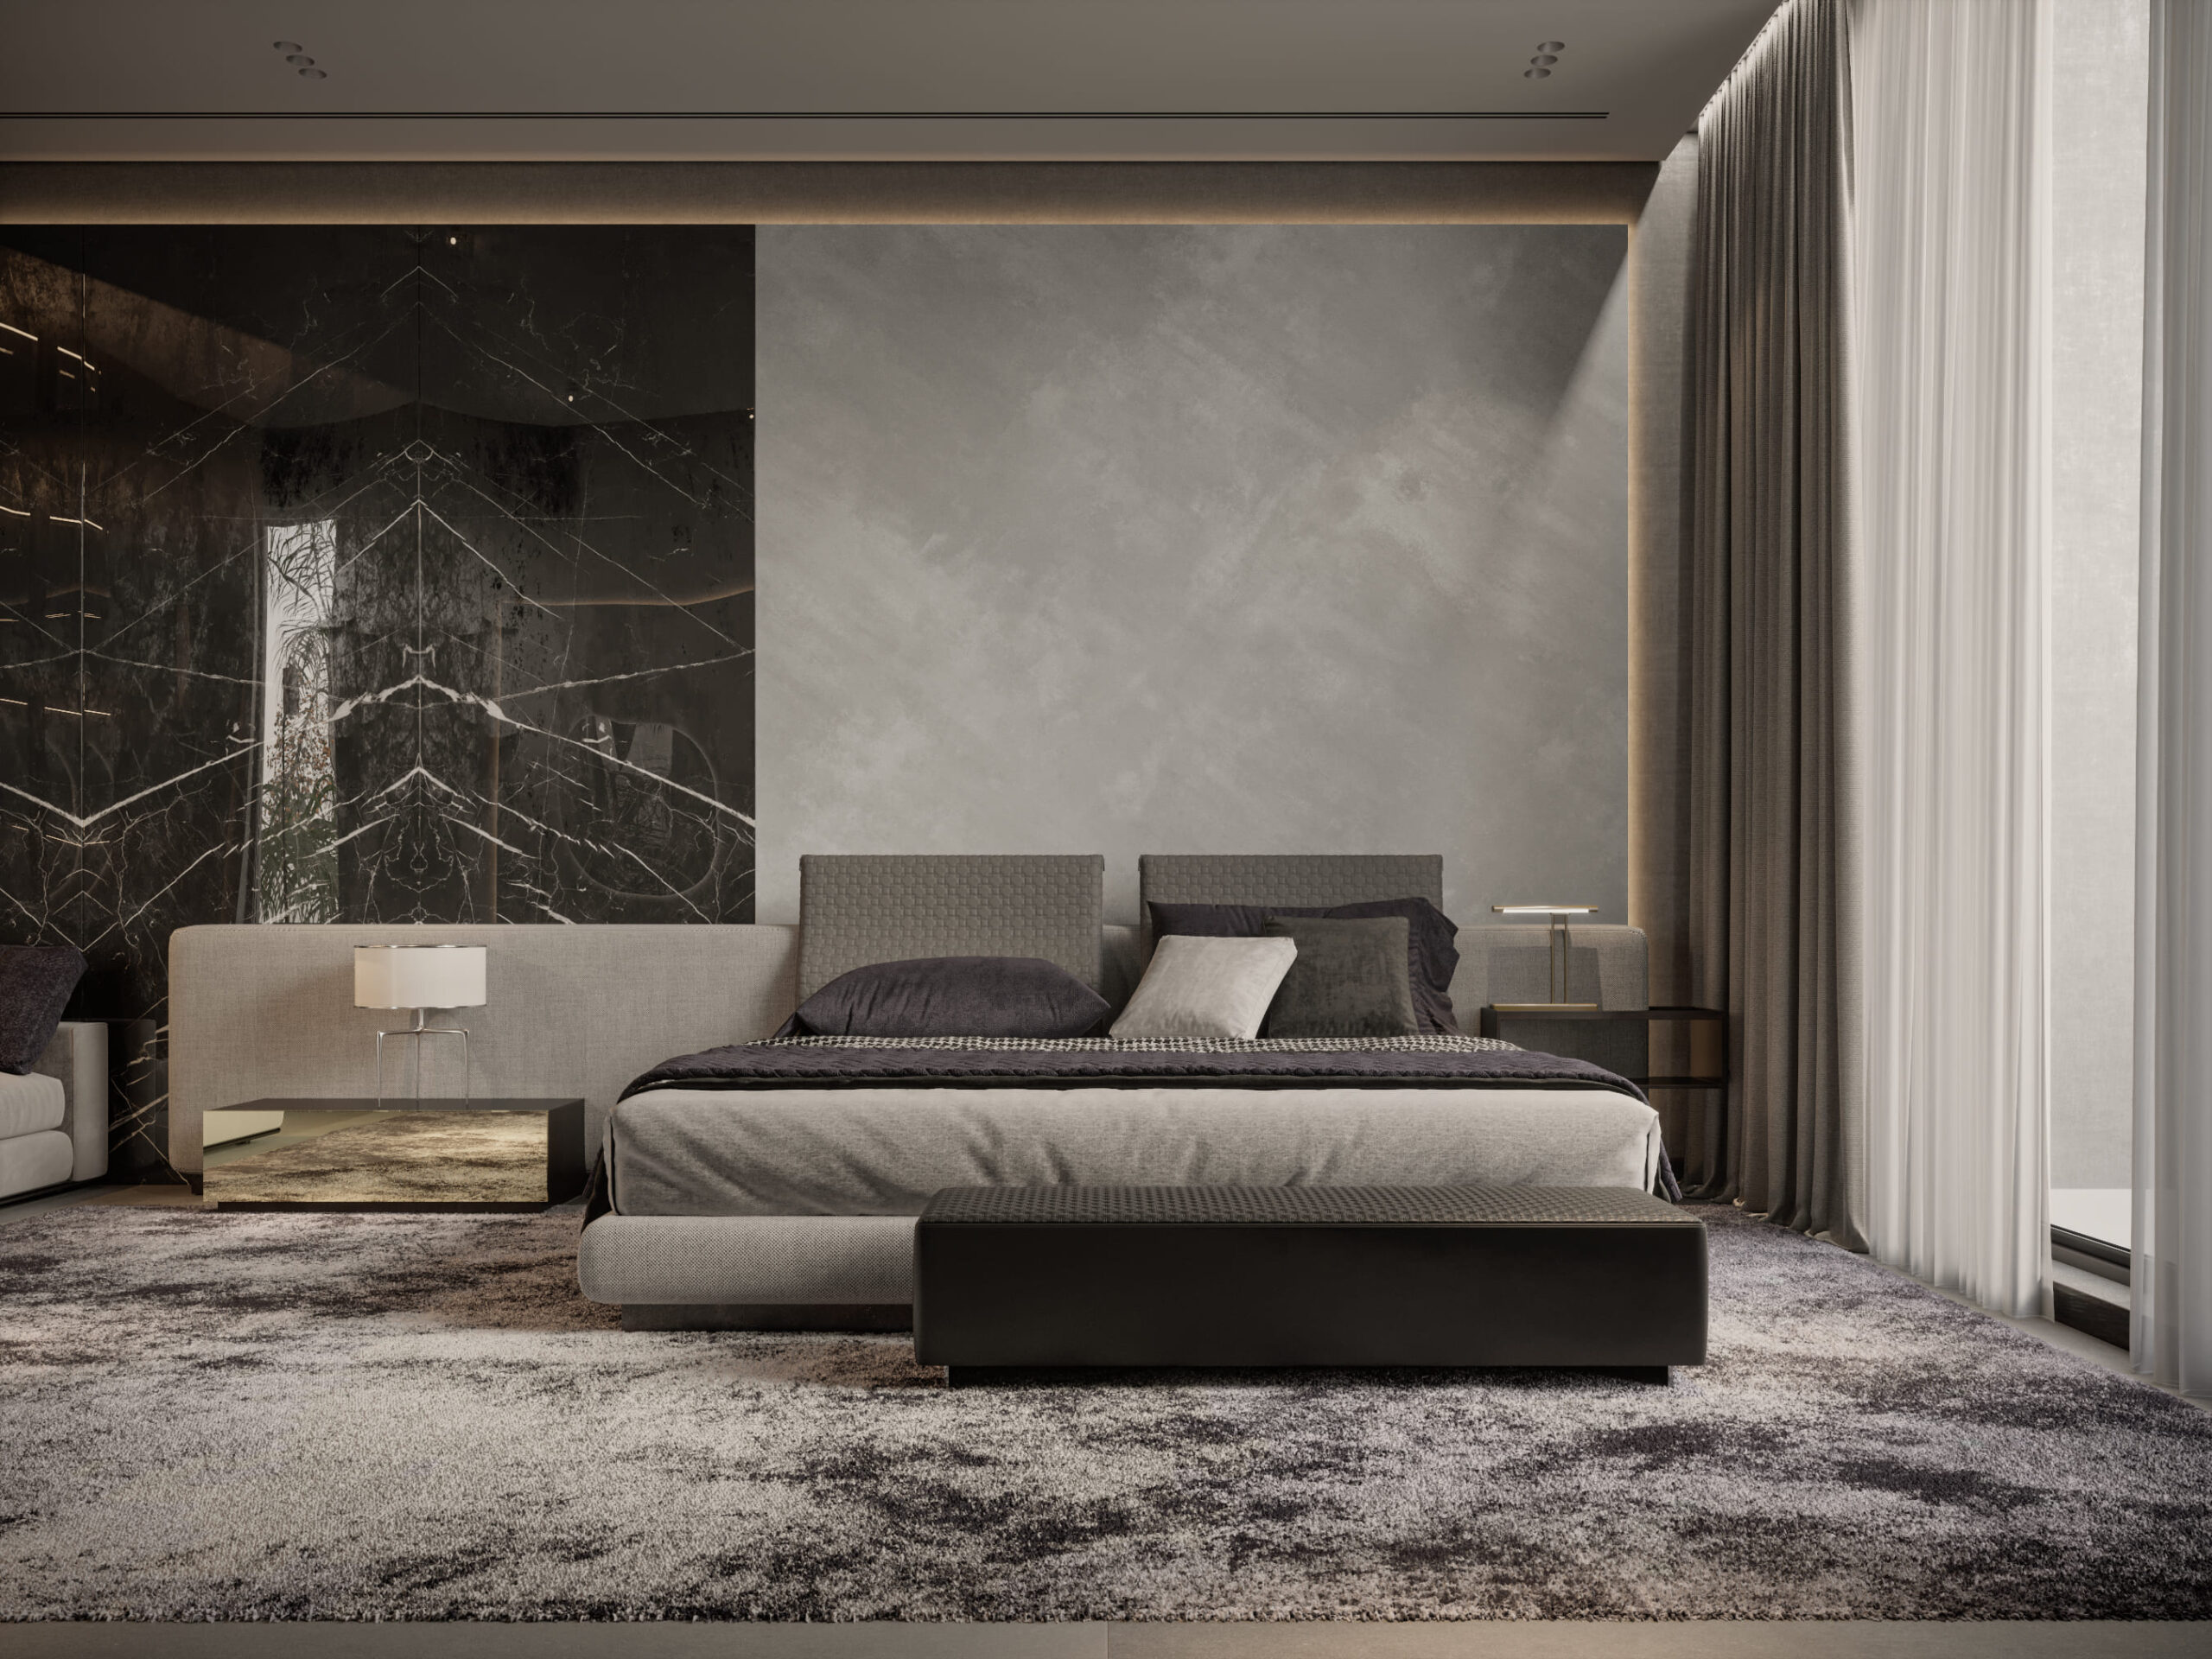 Interior design rad villa dubai hills by kg design guest bedroom photo 2